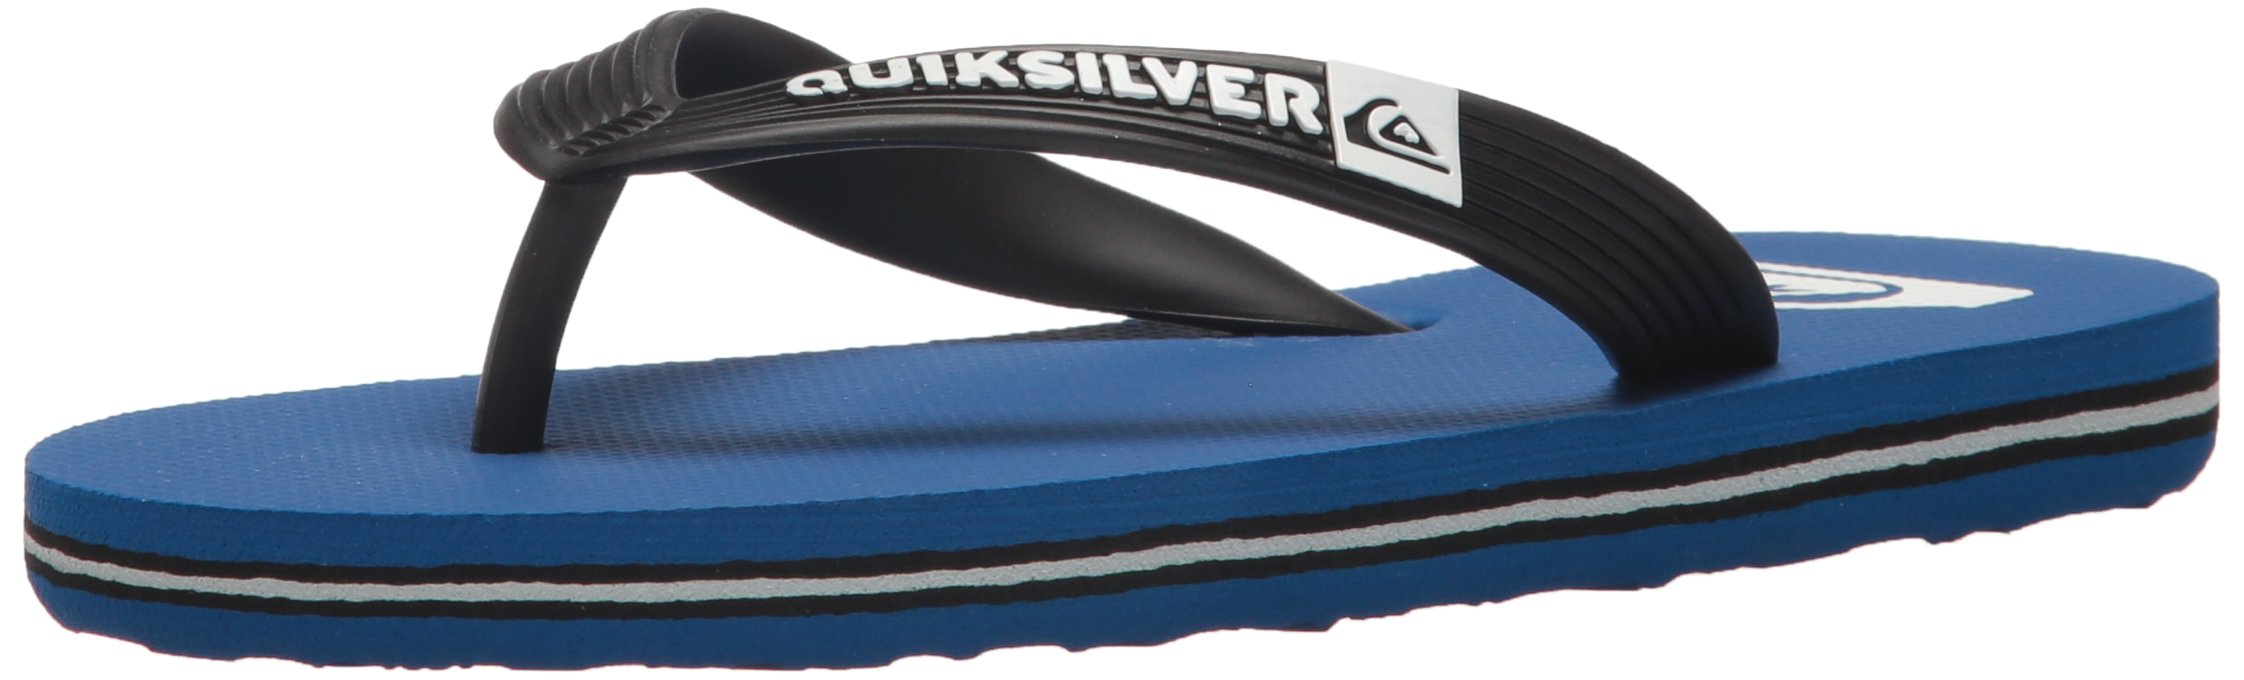 Quiksilver Unisex-Child Molokai Youth Sandal